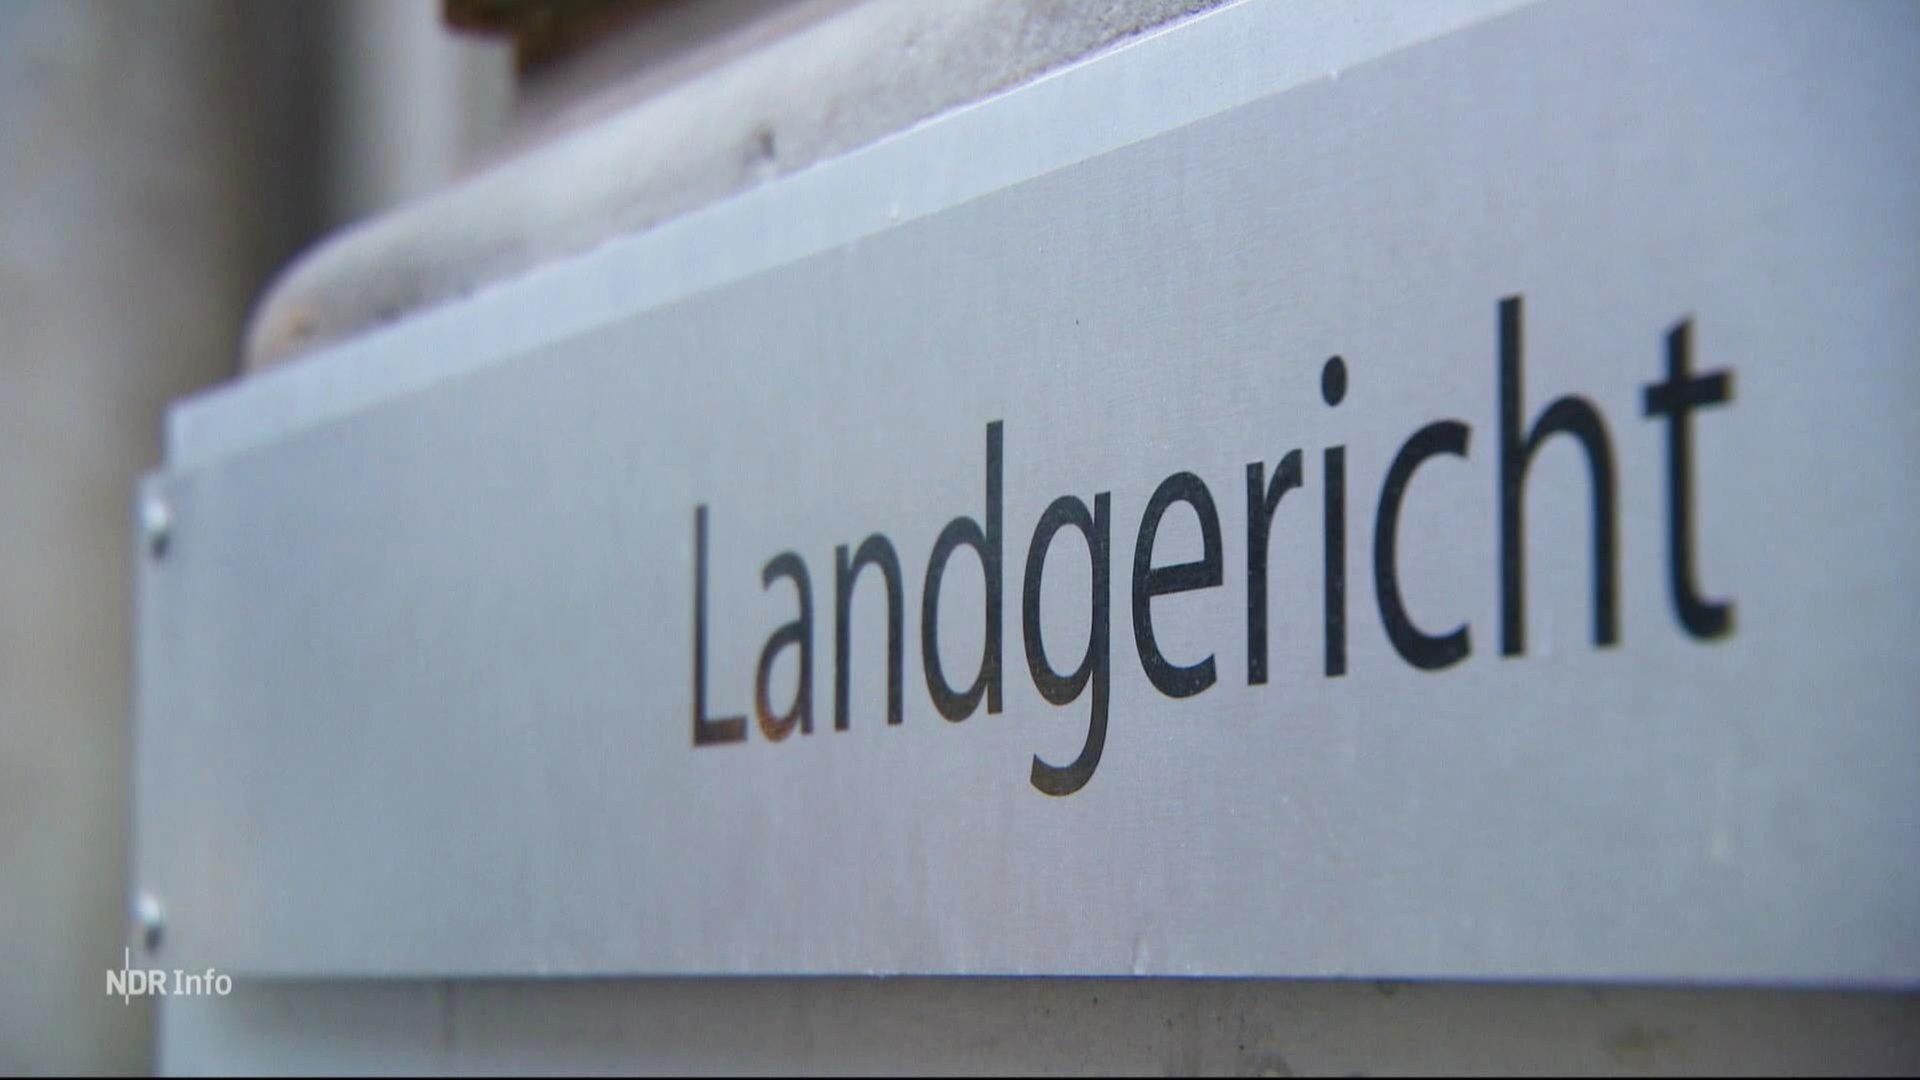 NDR Info: 14-Jähriger wegen heimtückischen Mordes vor Gericht | ARD Mediathek